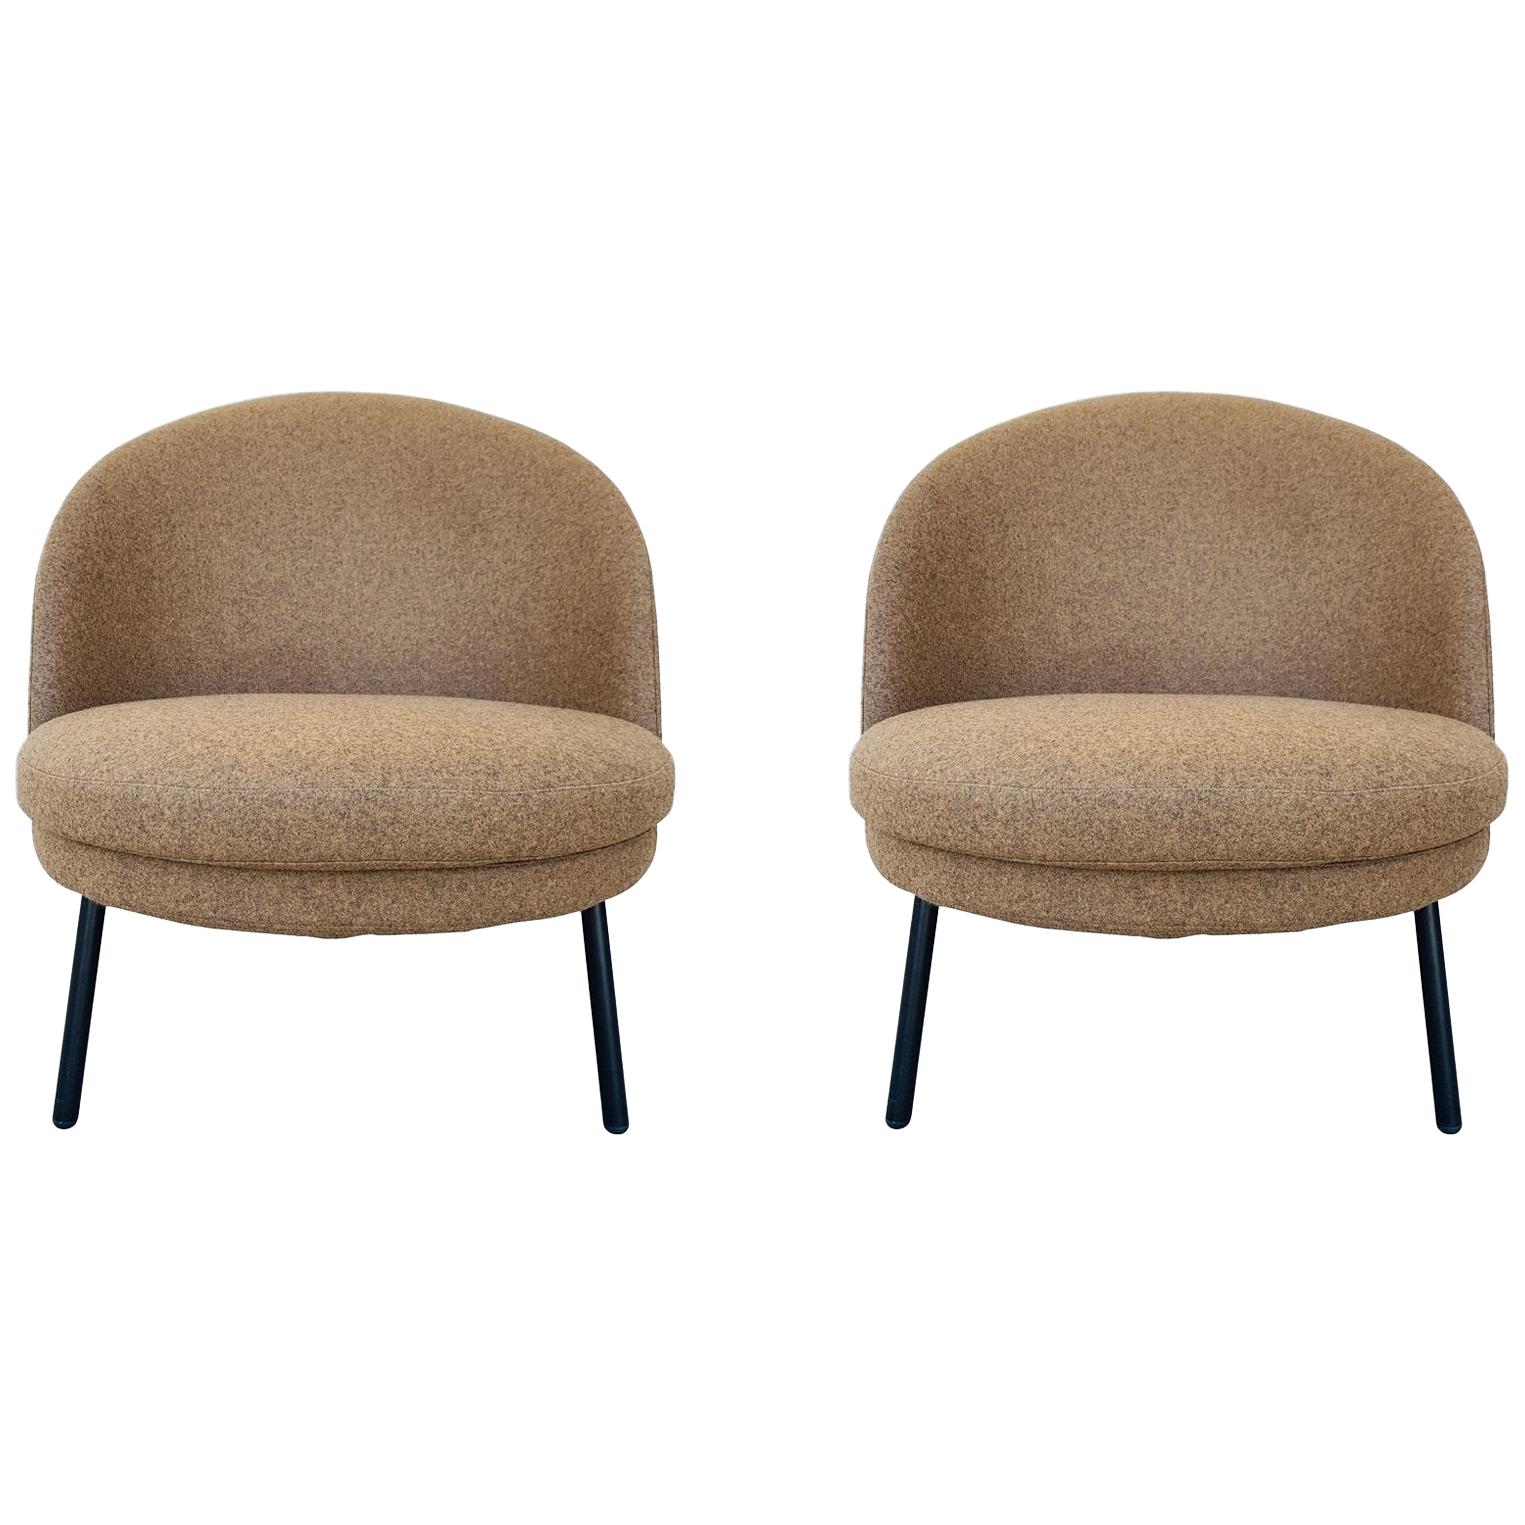 Pair of Jules Slipper Chairs by Claesson Koivisto Rune for Artflex